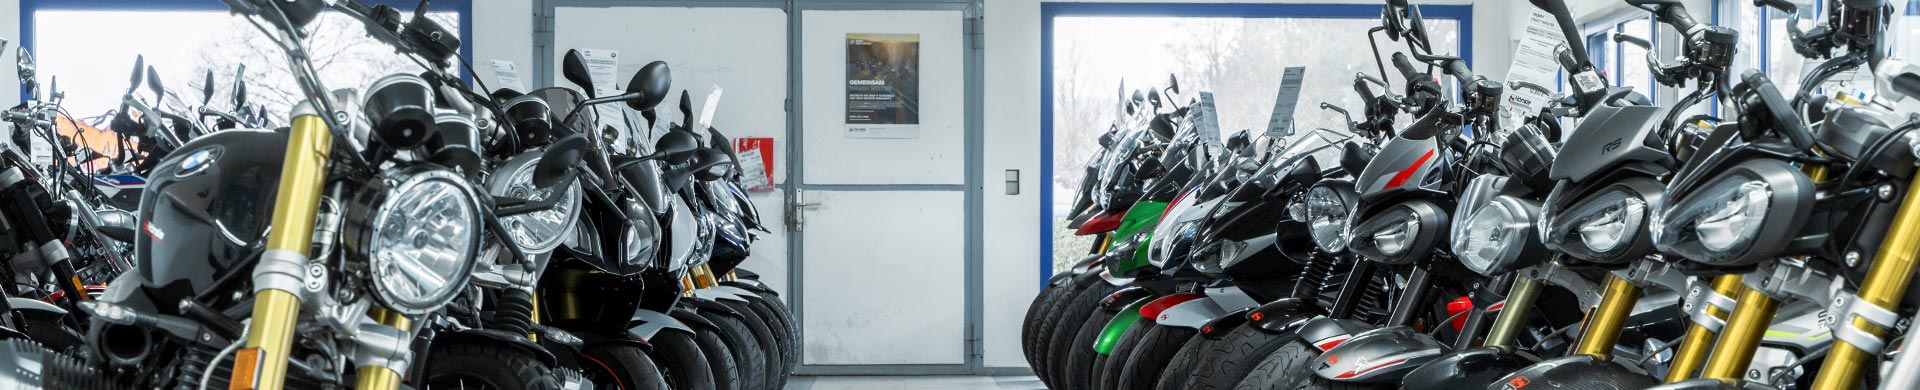 Hänsle Fahrzeugmarkt - finde dein nächstes Motorrad